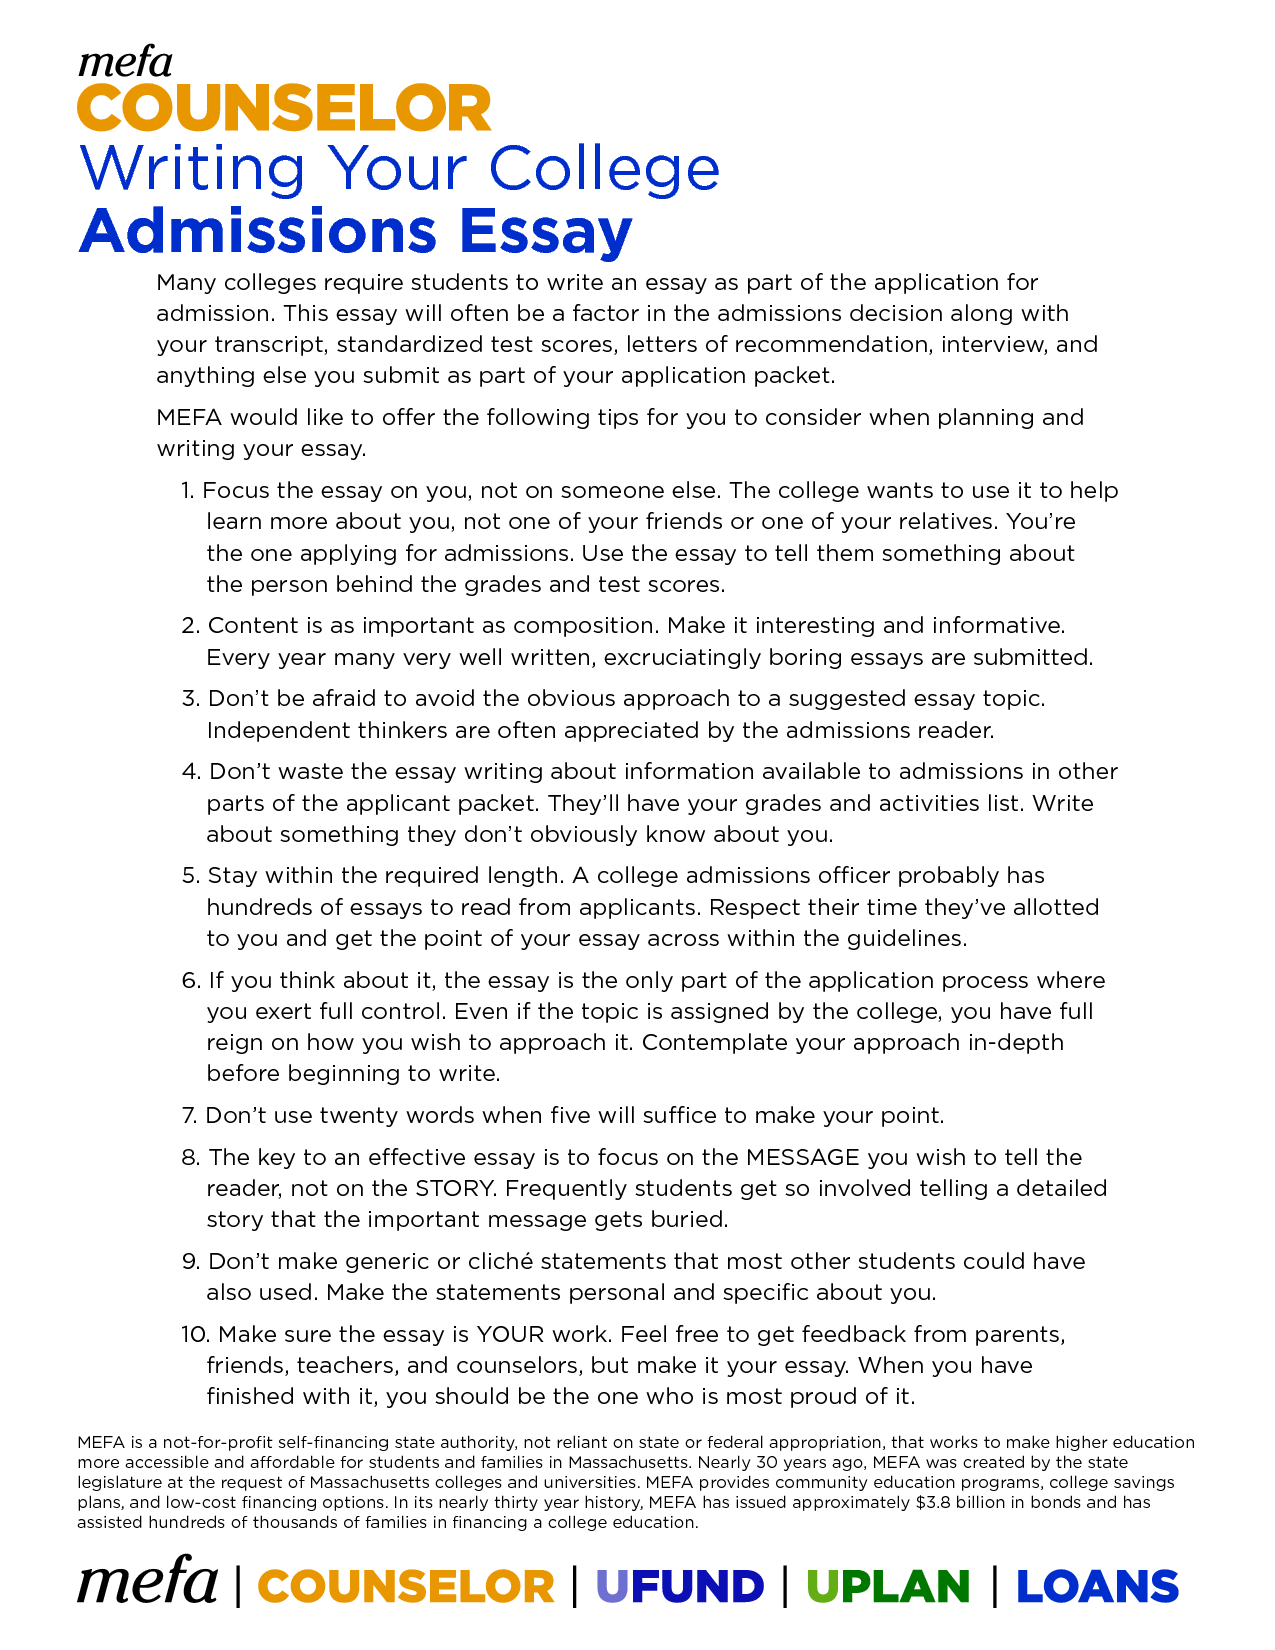 Write university essay service